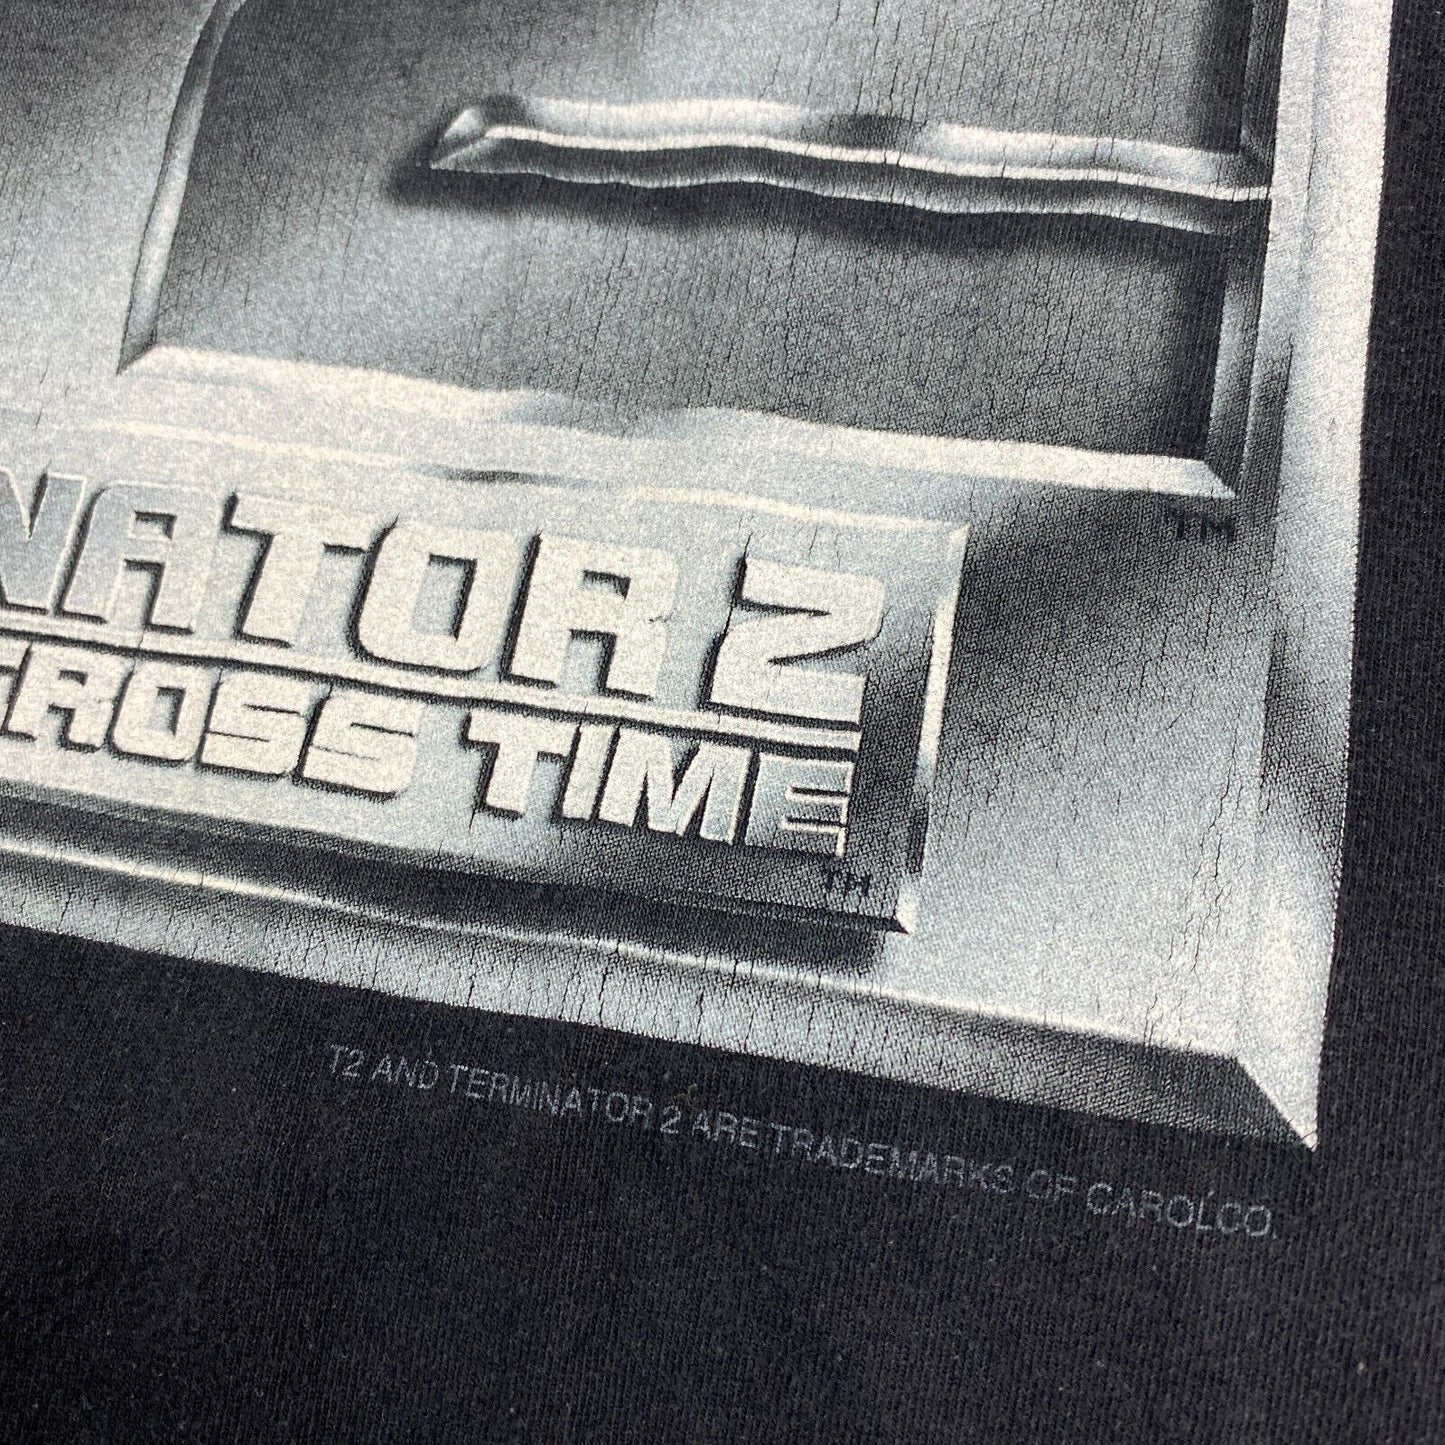 VINTAGE 90s Terminator 2 Universal Studios Movie T-Shirt sz M-L Men